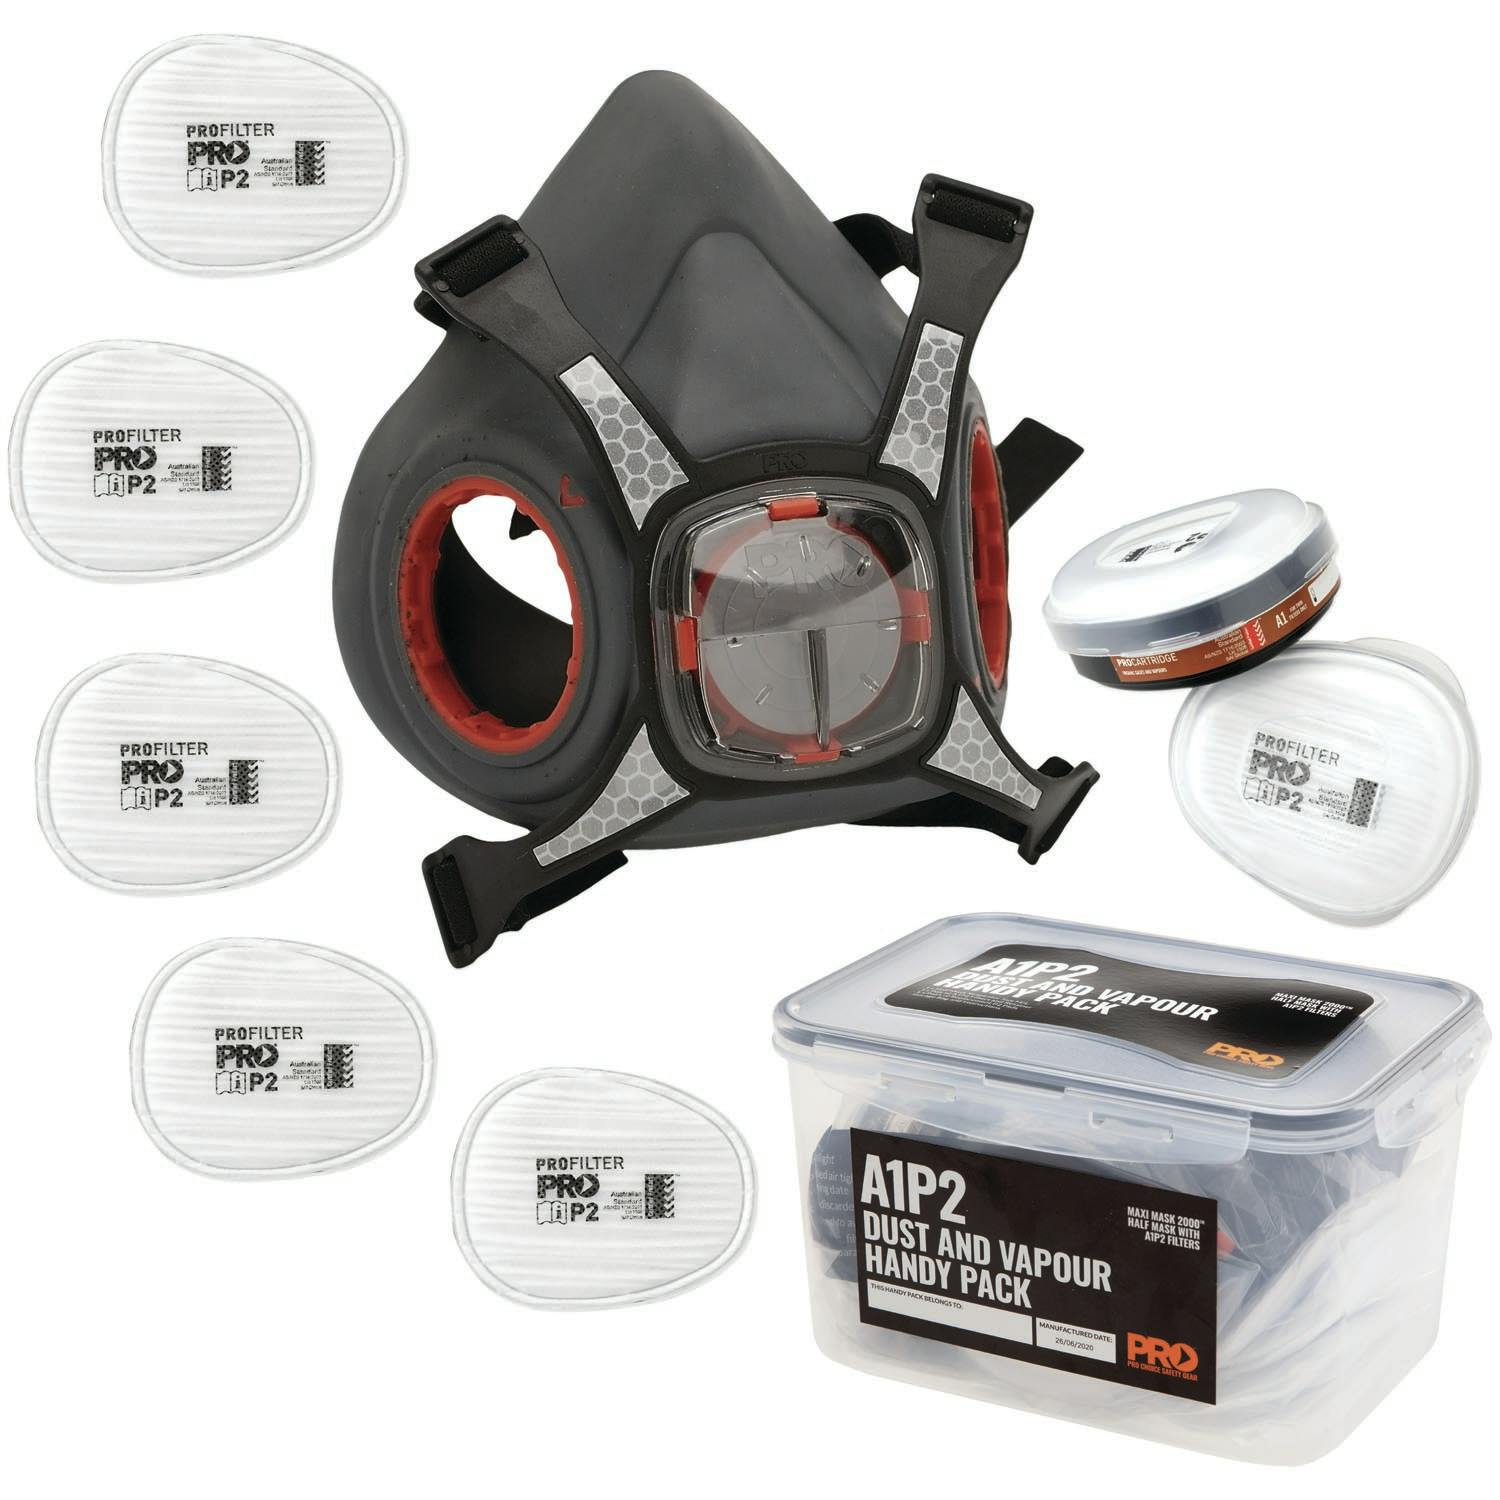 Pro Choice Maxi Mask 2000 Half Face Respirator Spraying Handy Pack